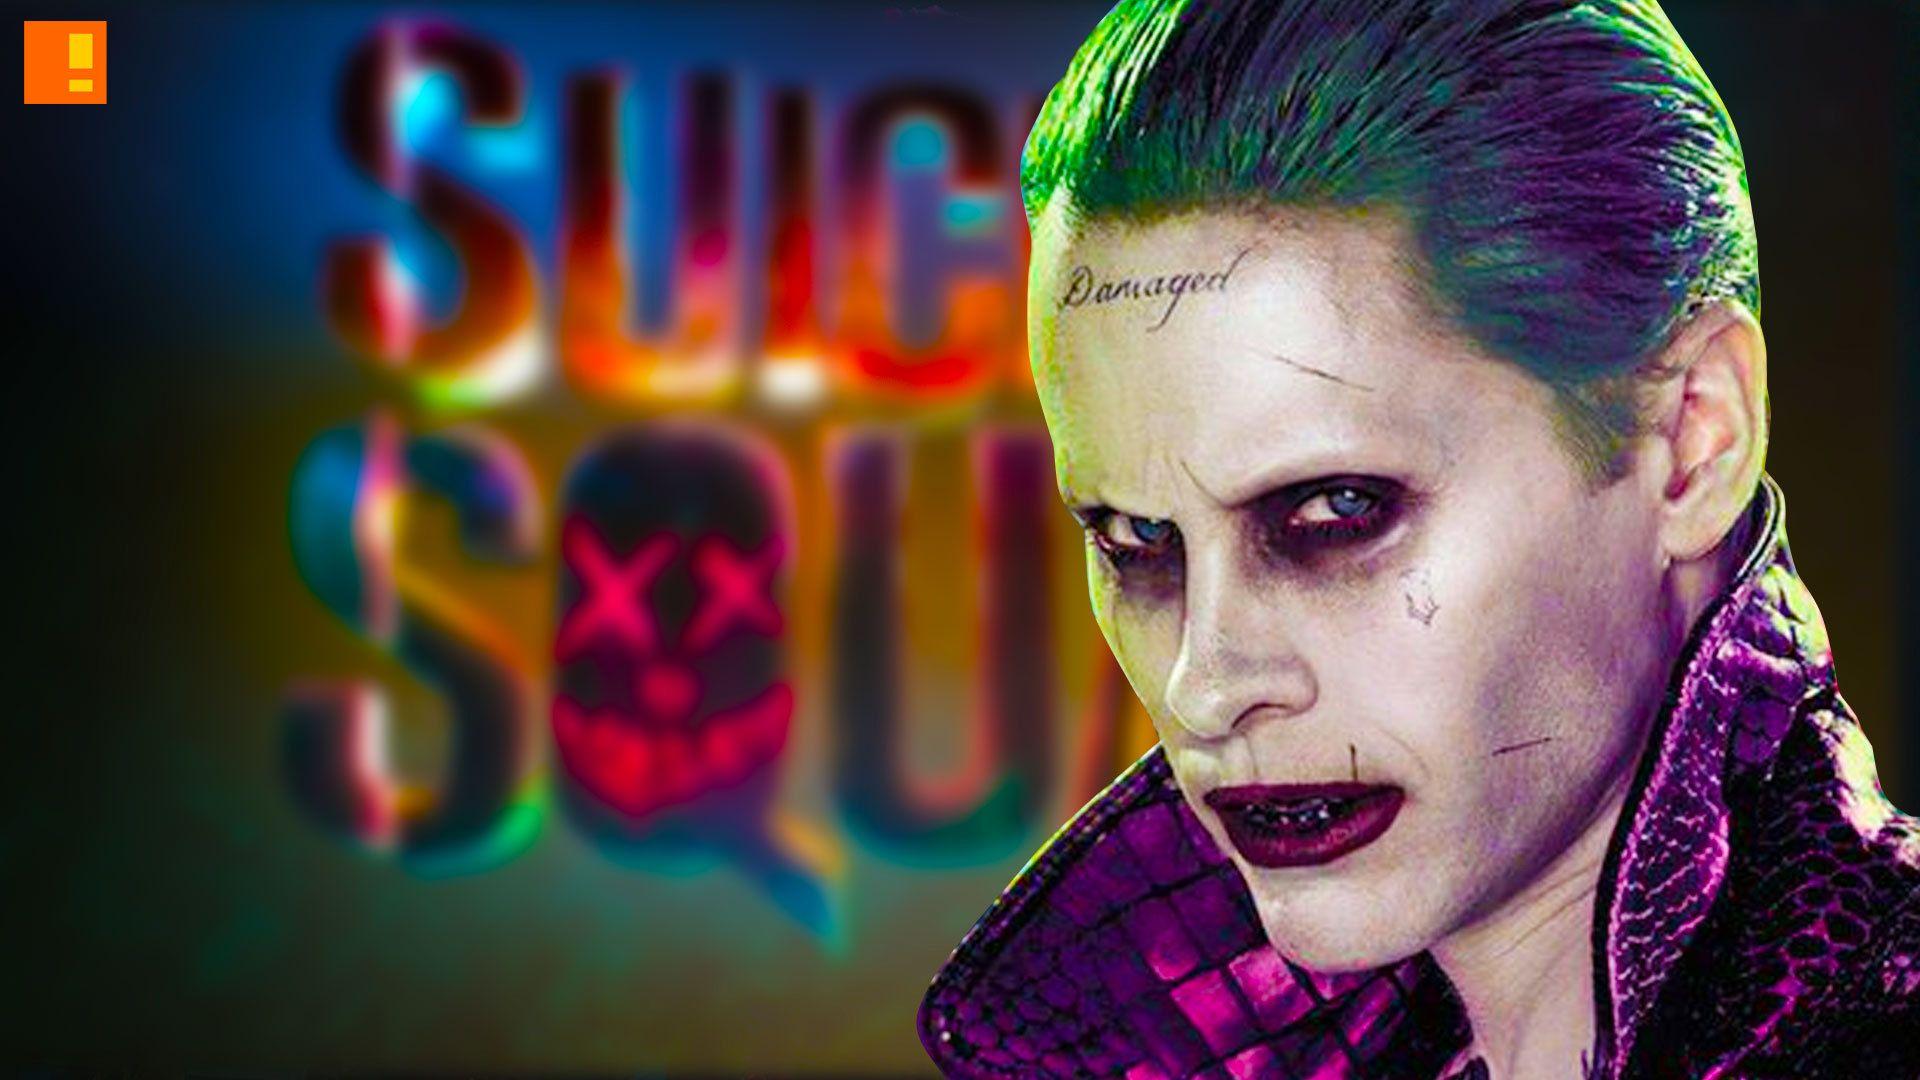 Joker Suicide Squad Wallpaper Image Photo Picture Background